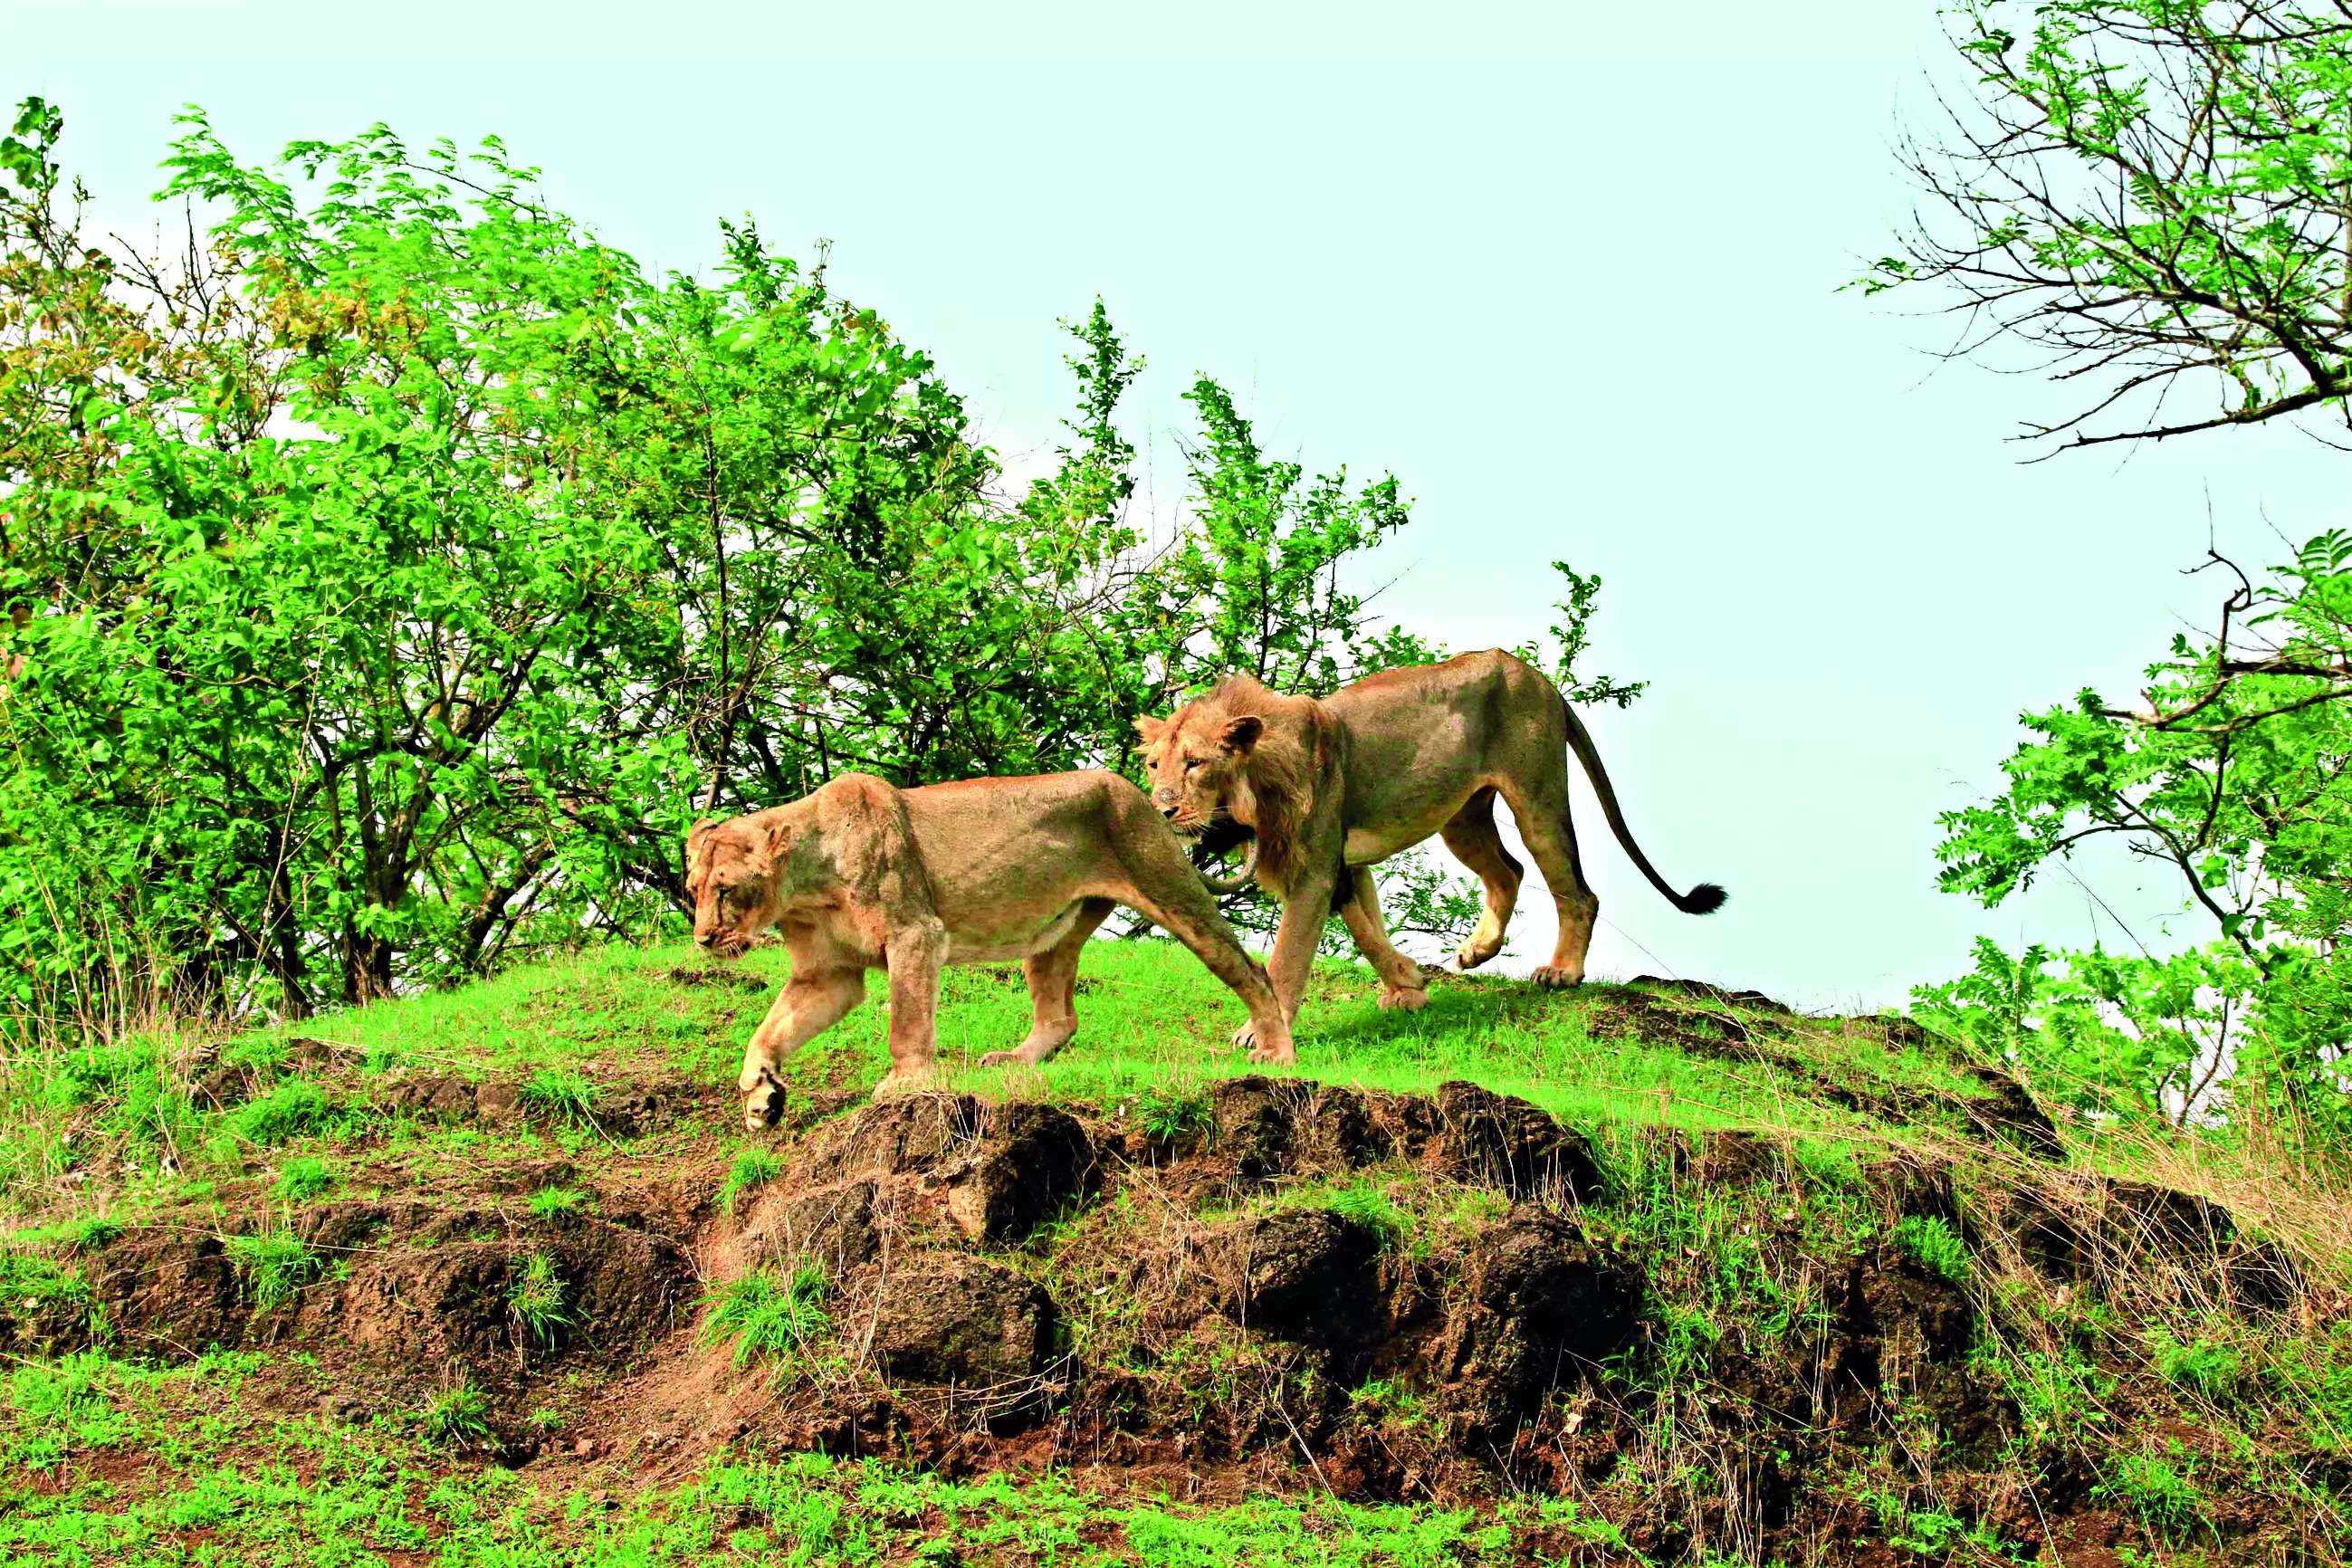 Gujarat forest dept to set up lion safari park near Diu